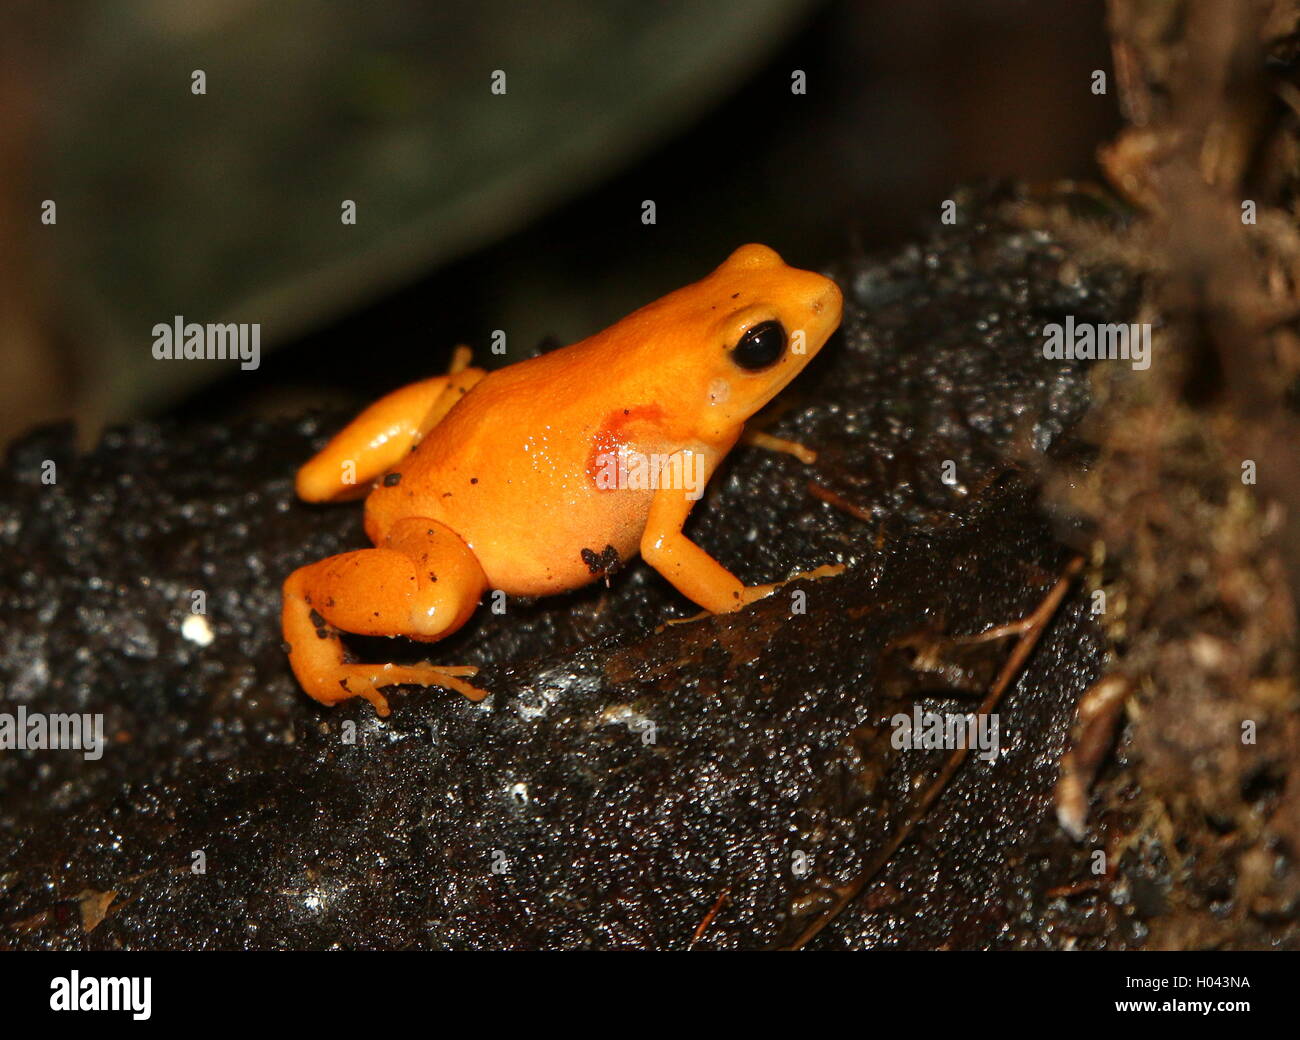 Madagascan Golden Mantella frog (Mantella aurantiaca), critically endangered in the wild. Stock Photo